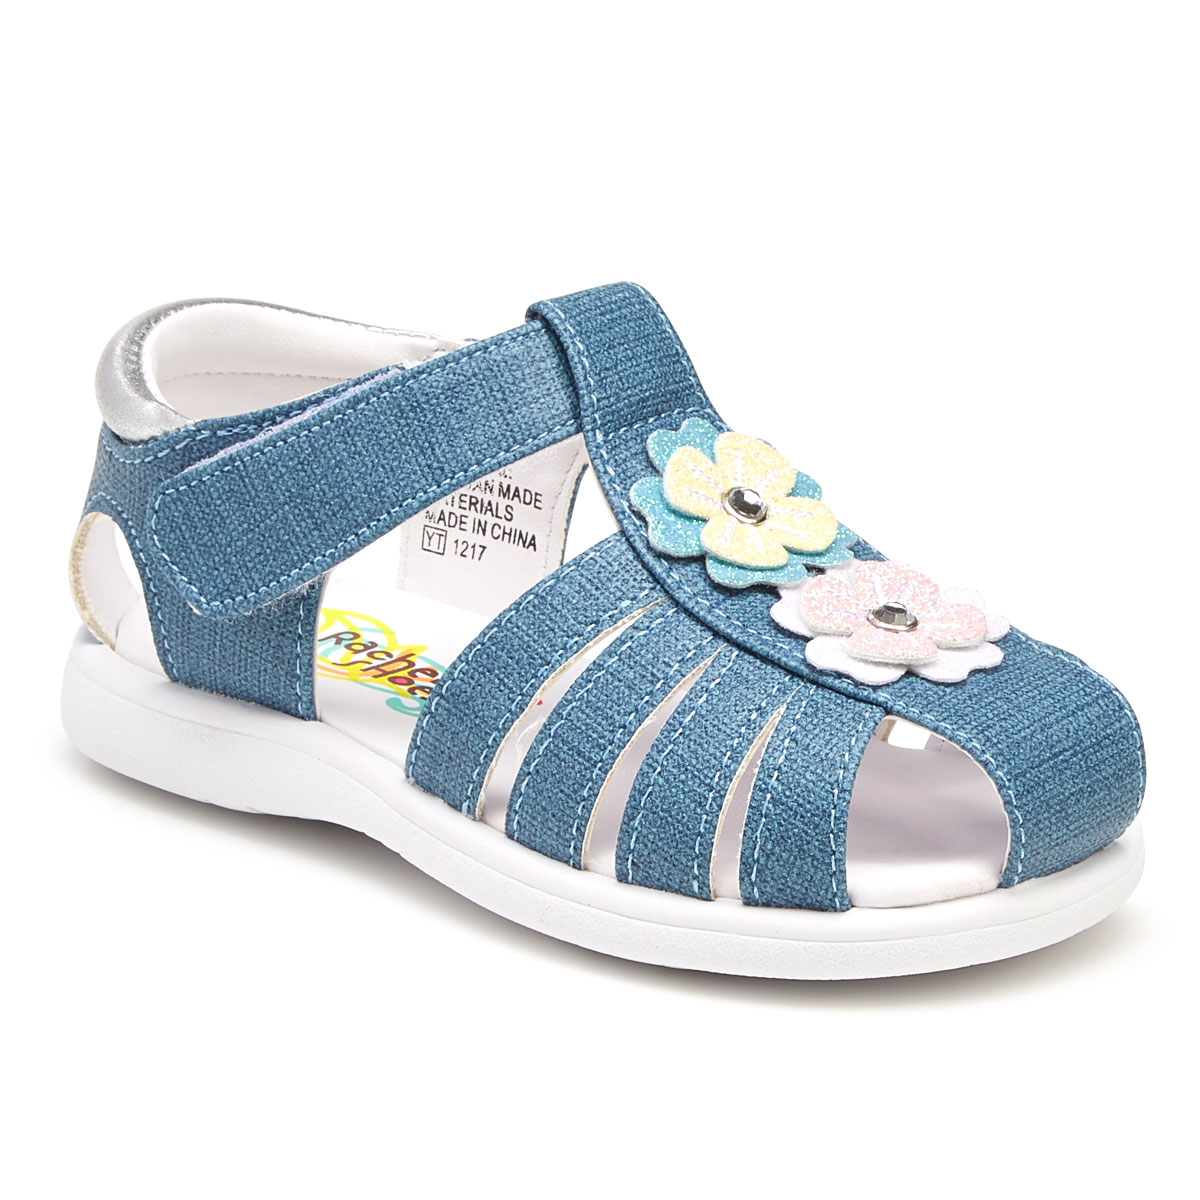 Rachel Shoes Toddler Girls' Mae Fisherman Sandals - Blue, 6